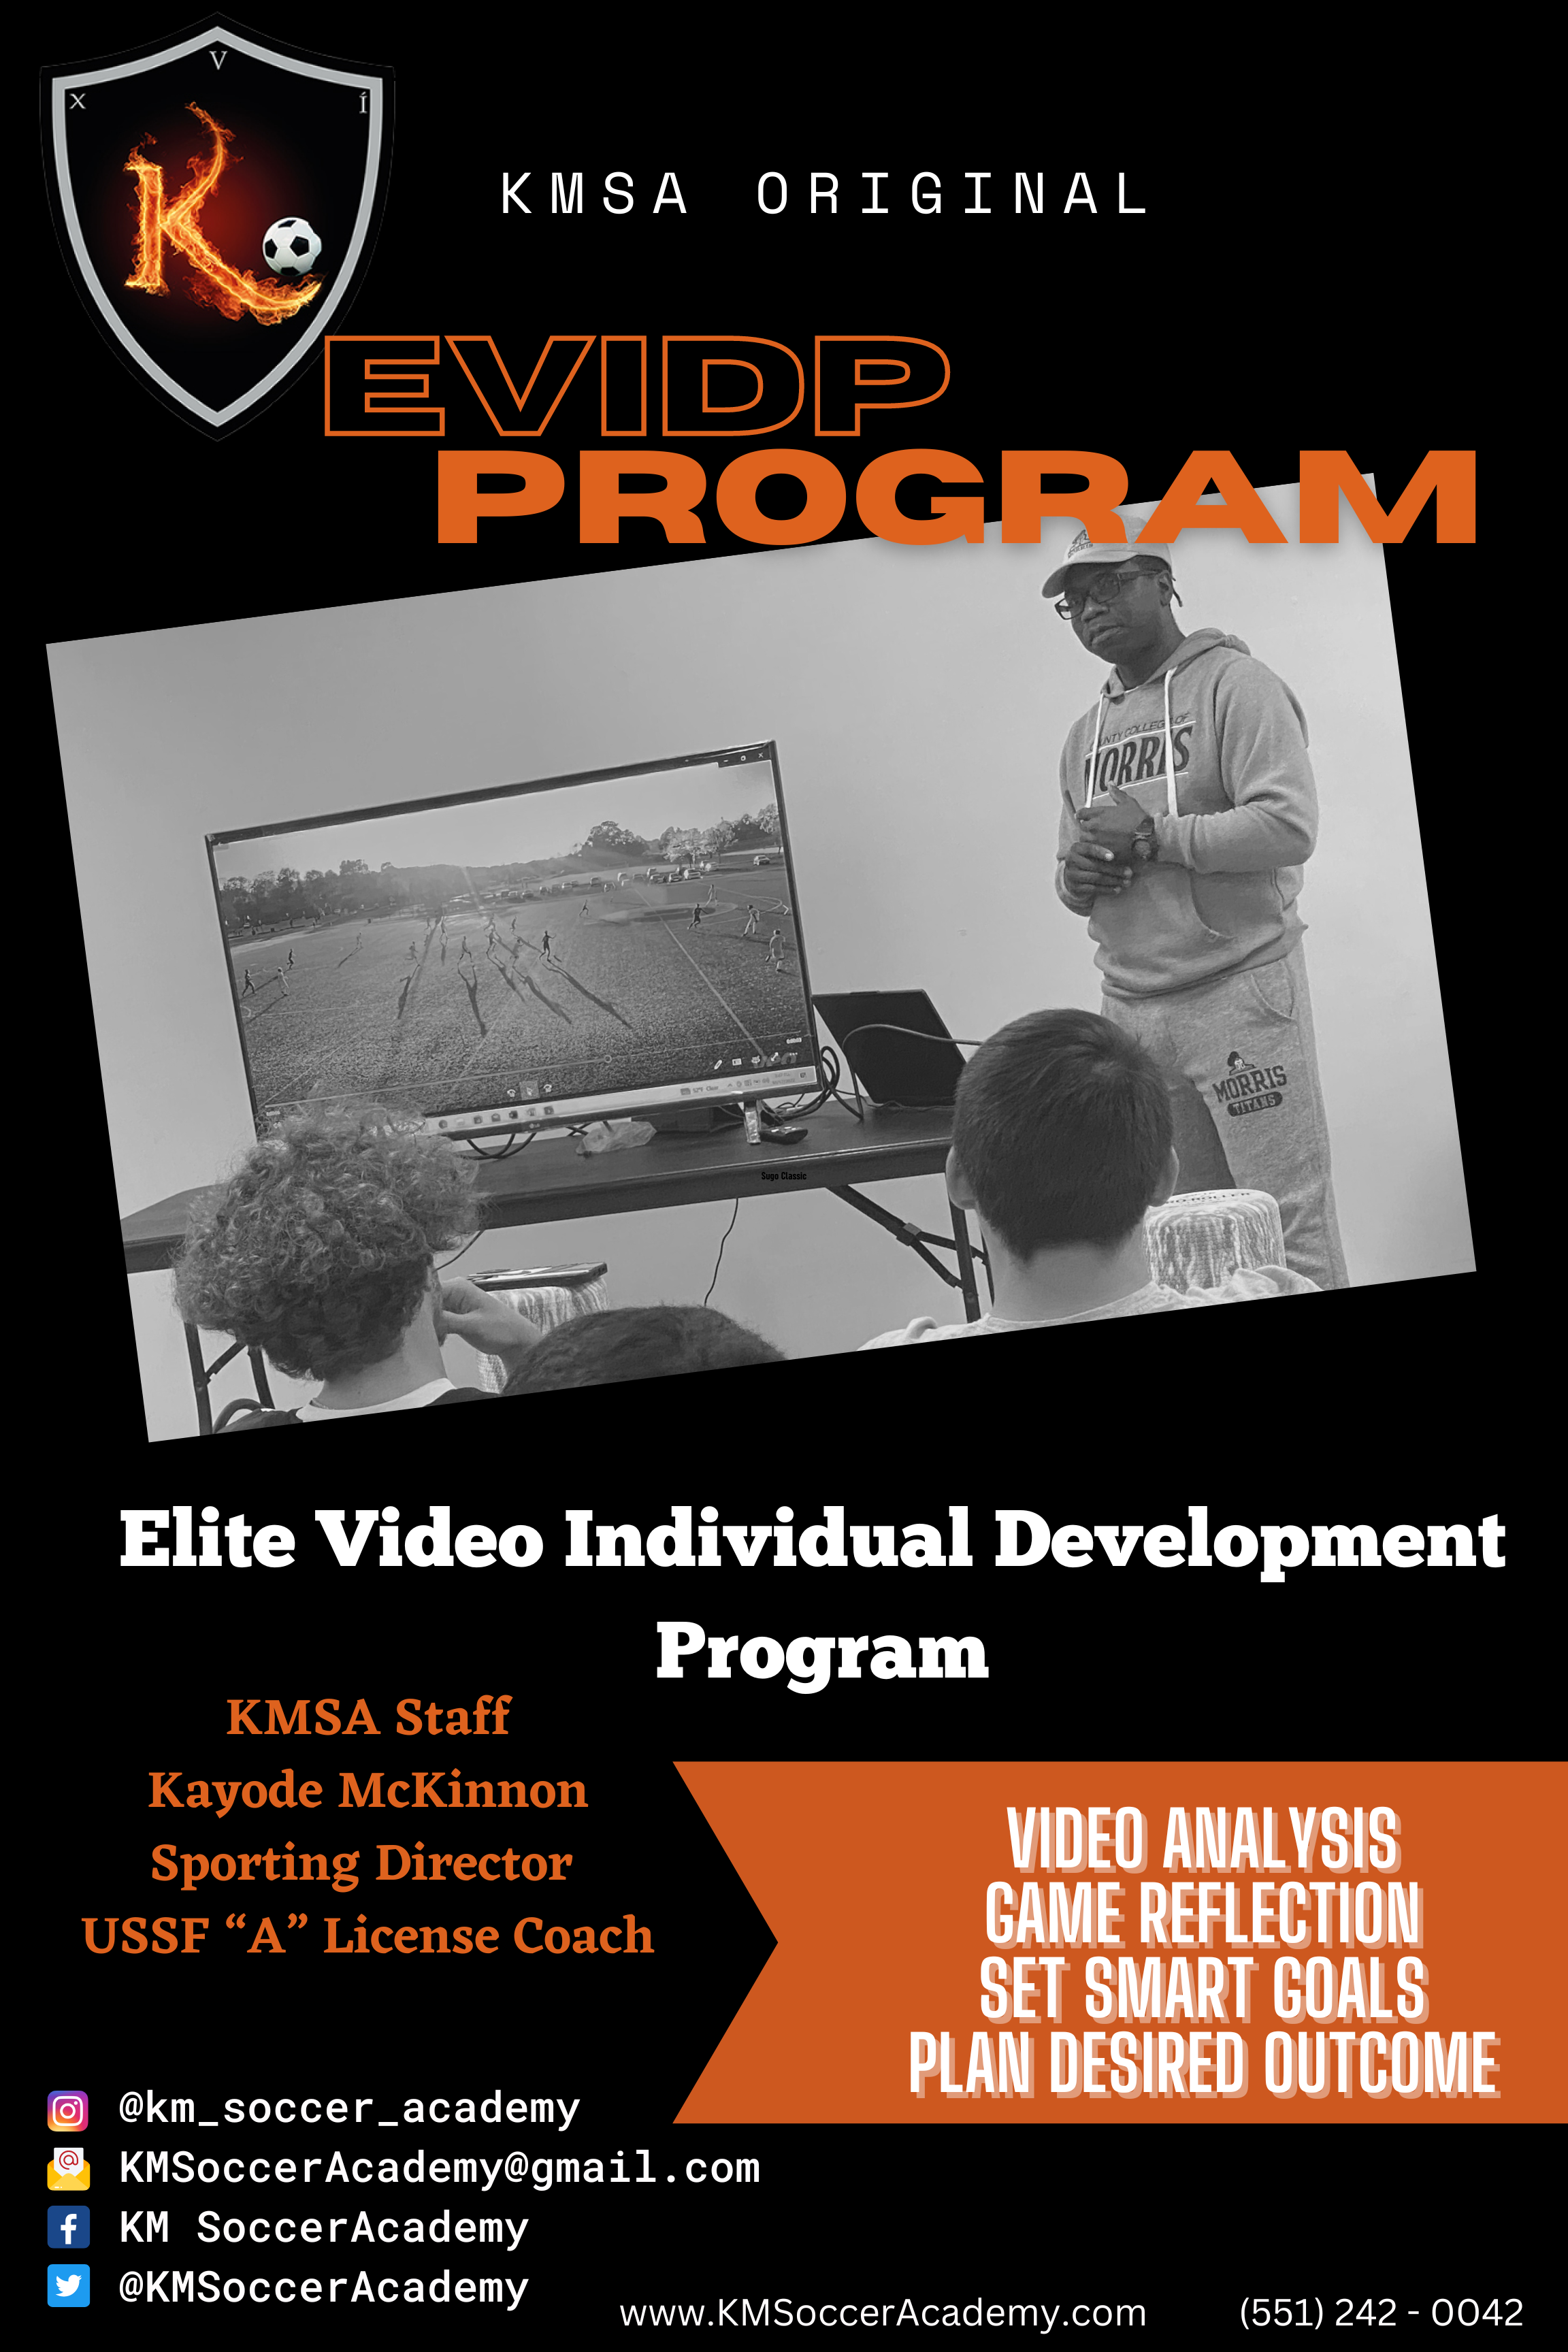 Elite Video Individual Development Program